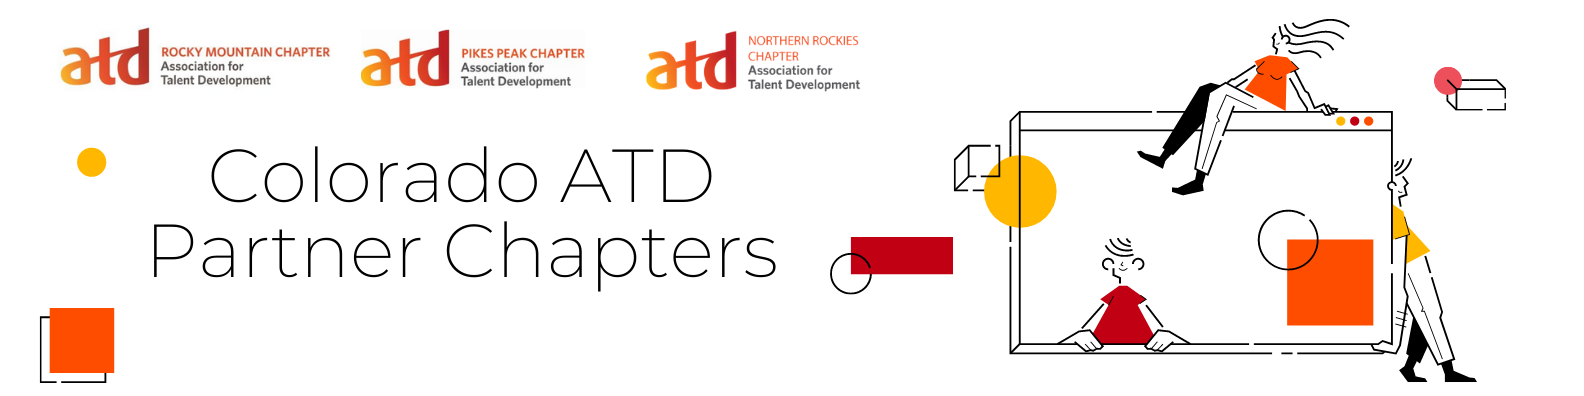 Colorado ATD Partner Chapters logo